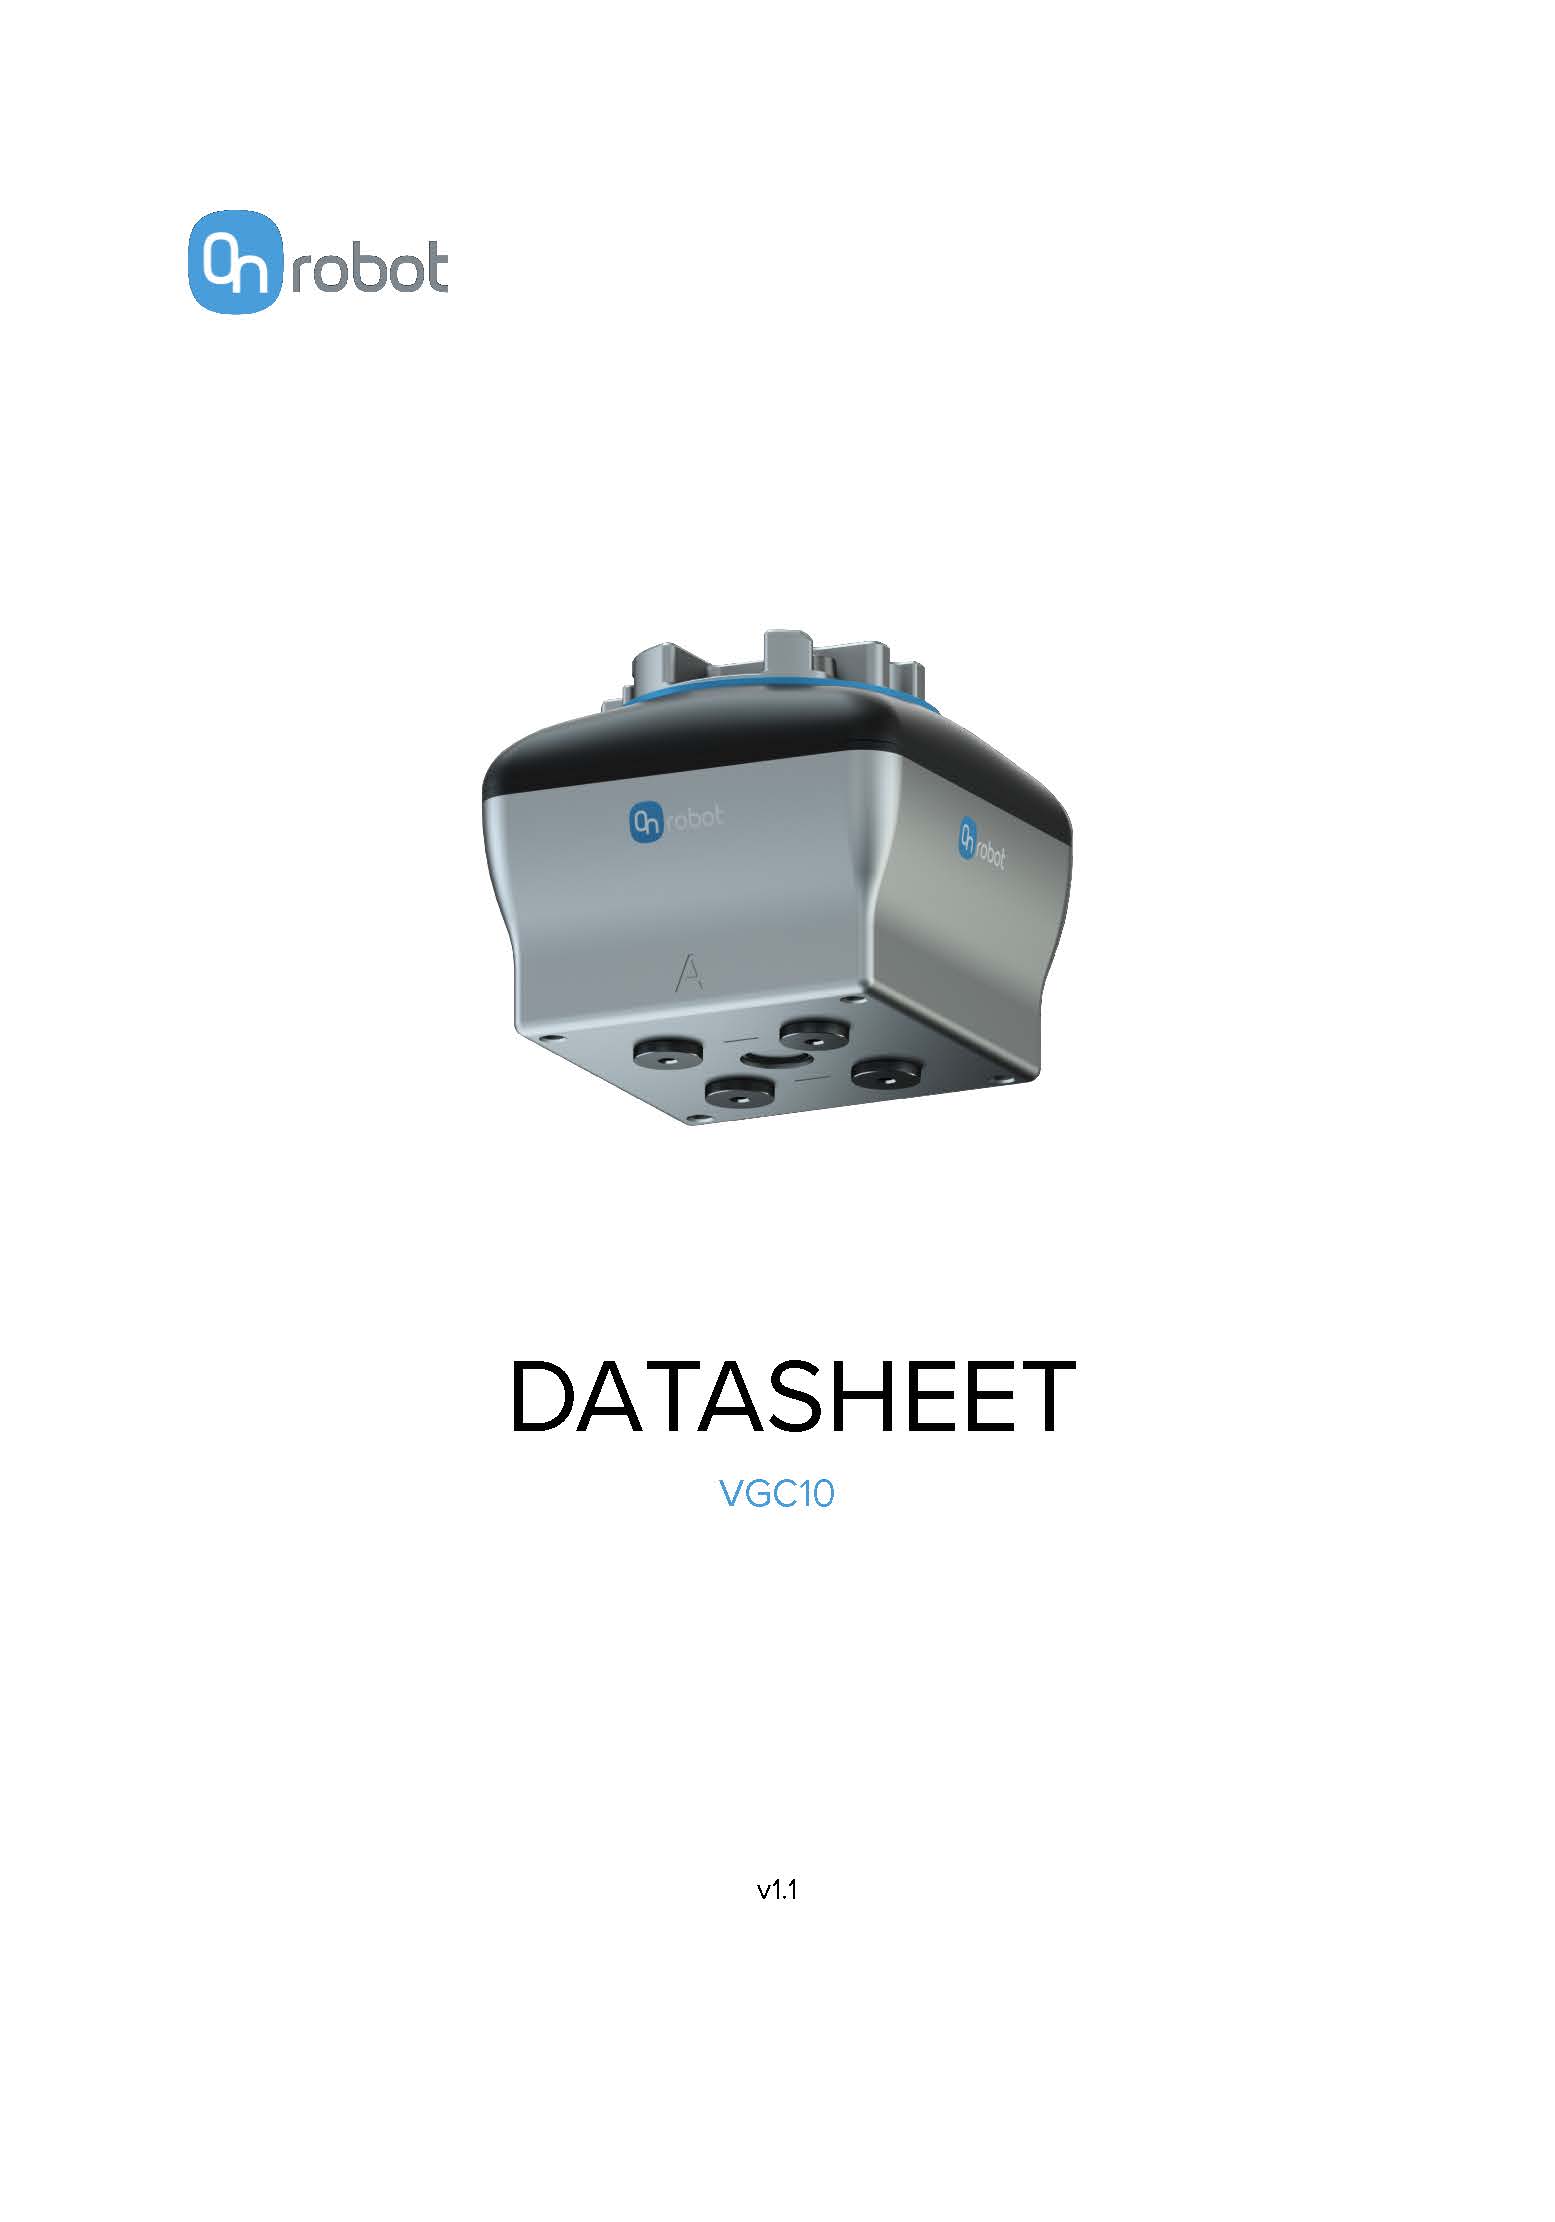 OnRobot VGC10 Datasheet